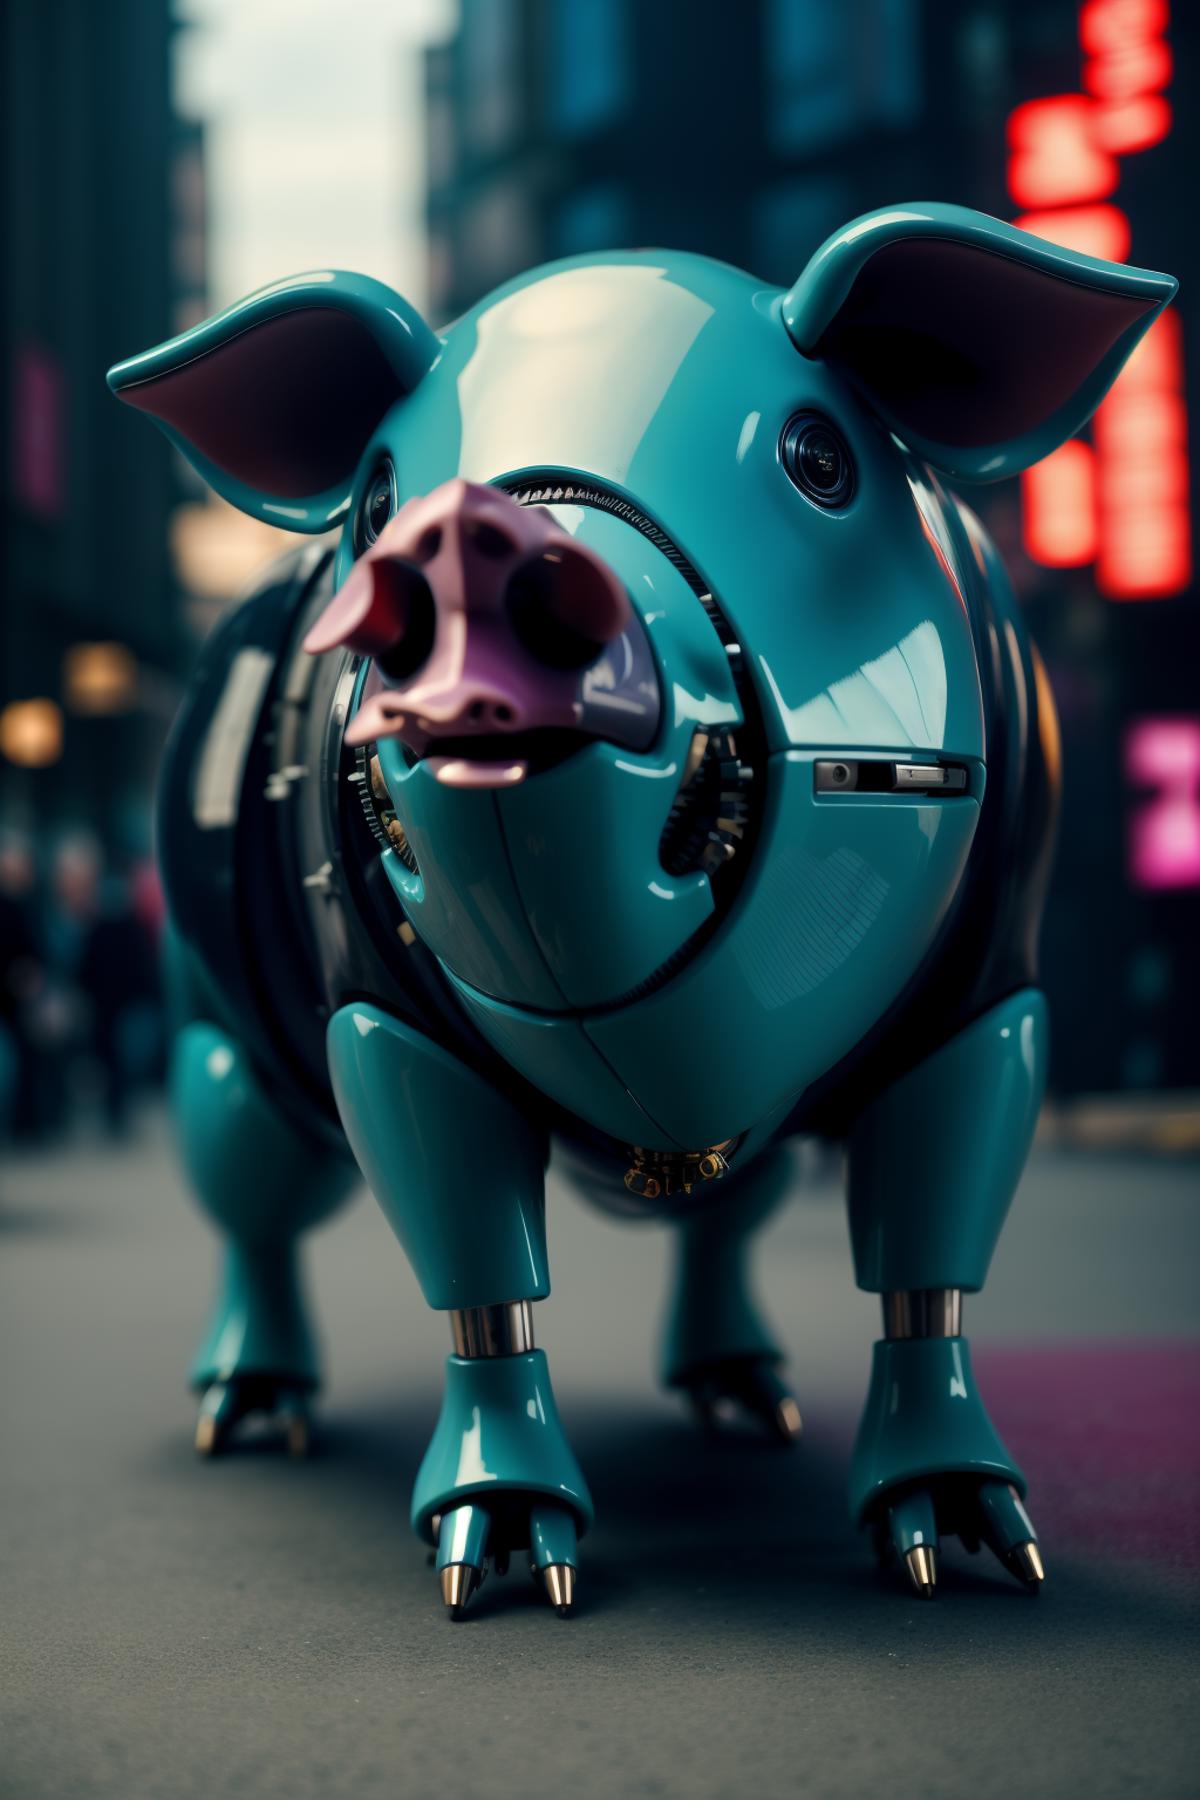 mechanical pig image by InfiniteLight